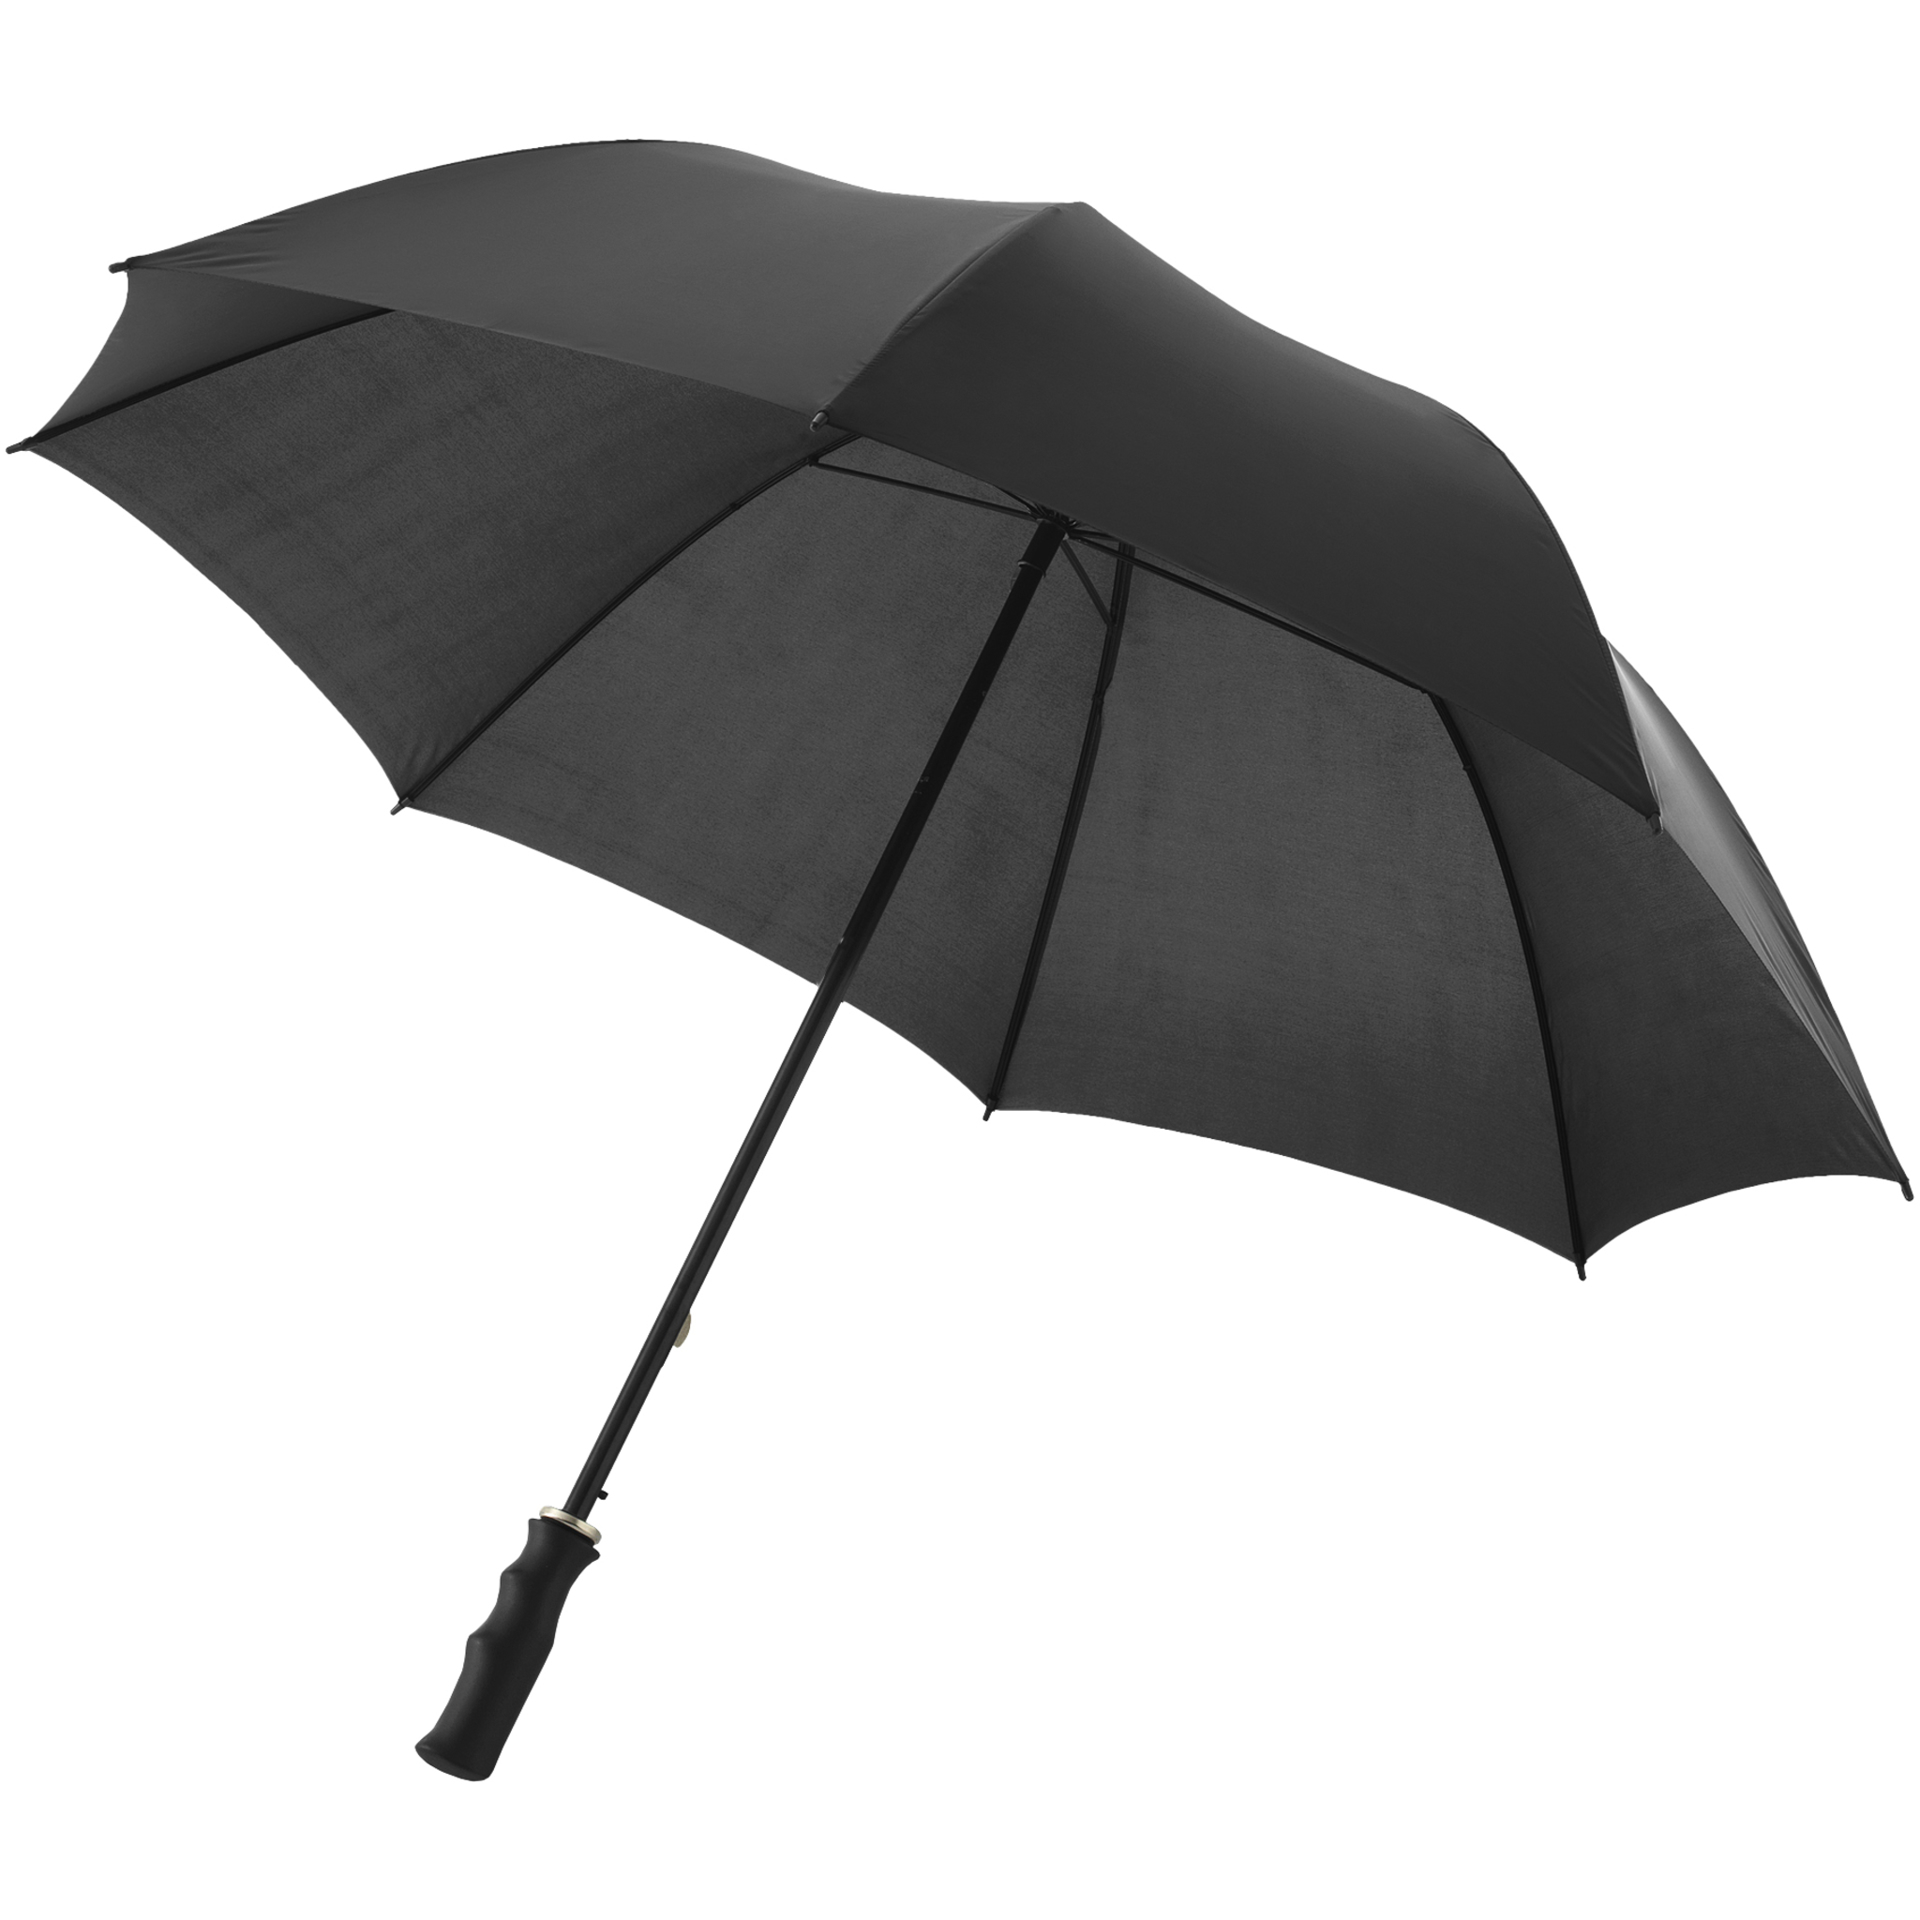 30 inch Golf Umbrella in black